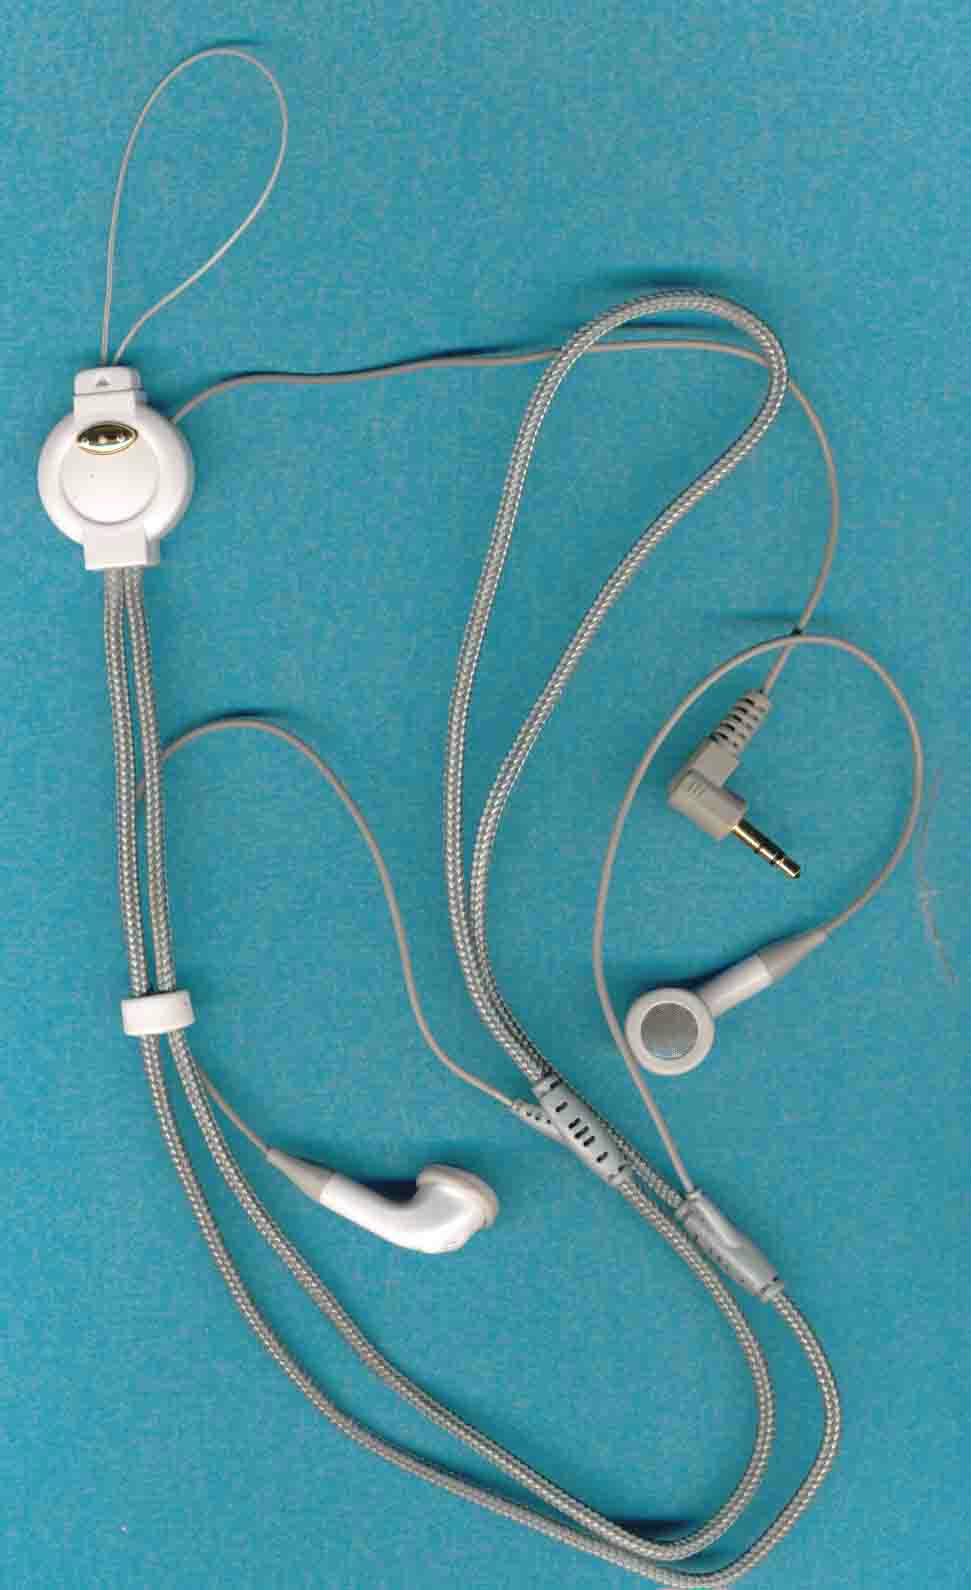 kq-405耳机